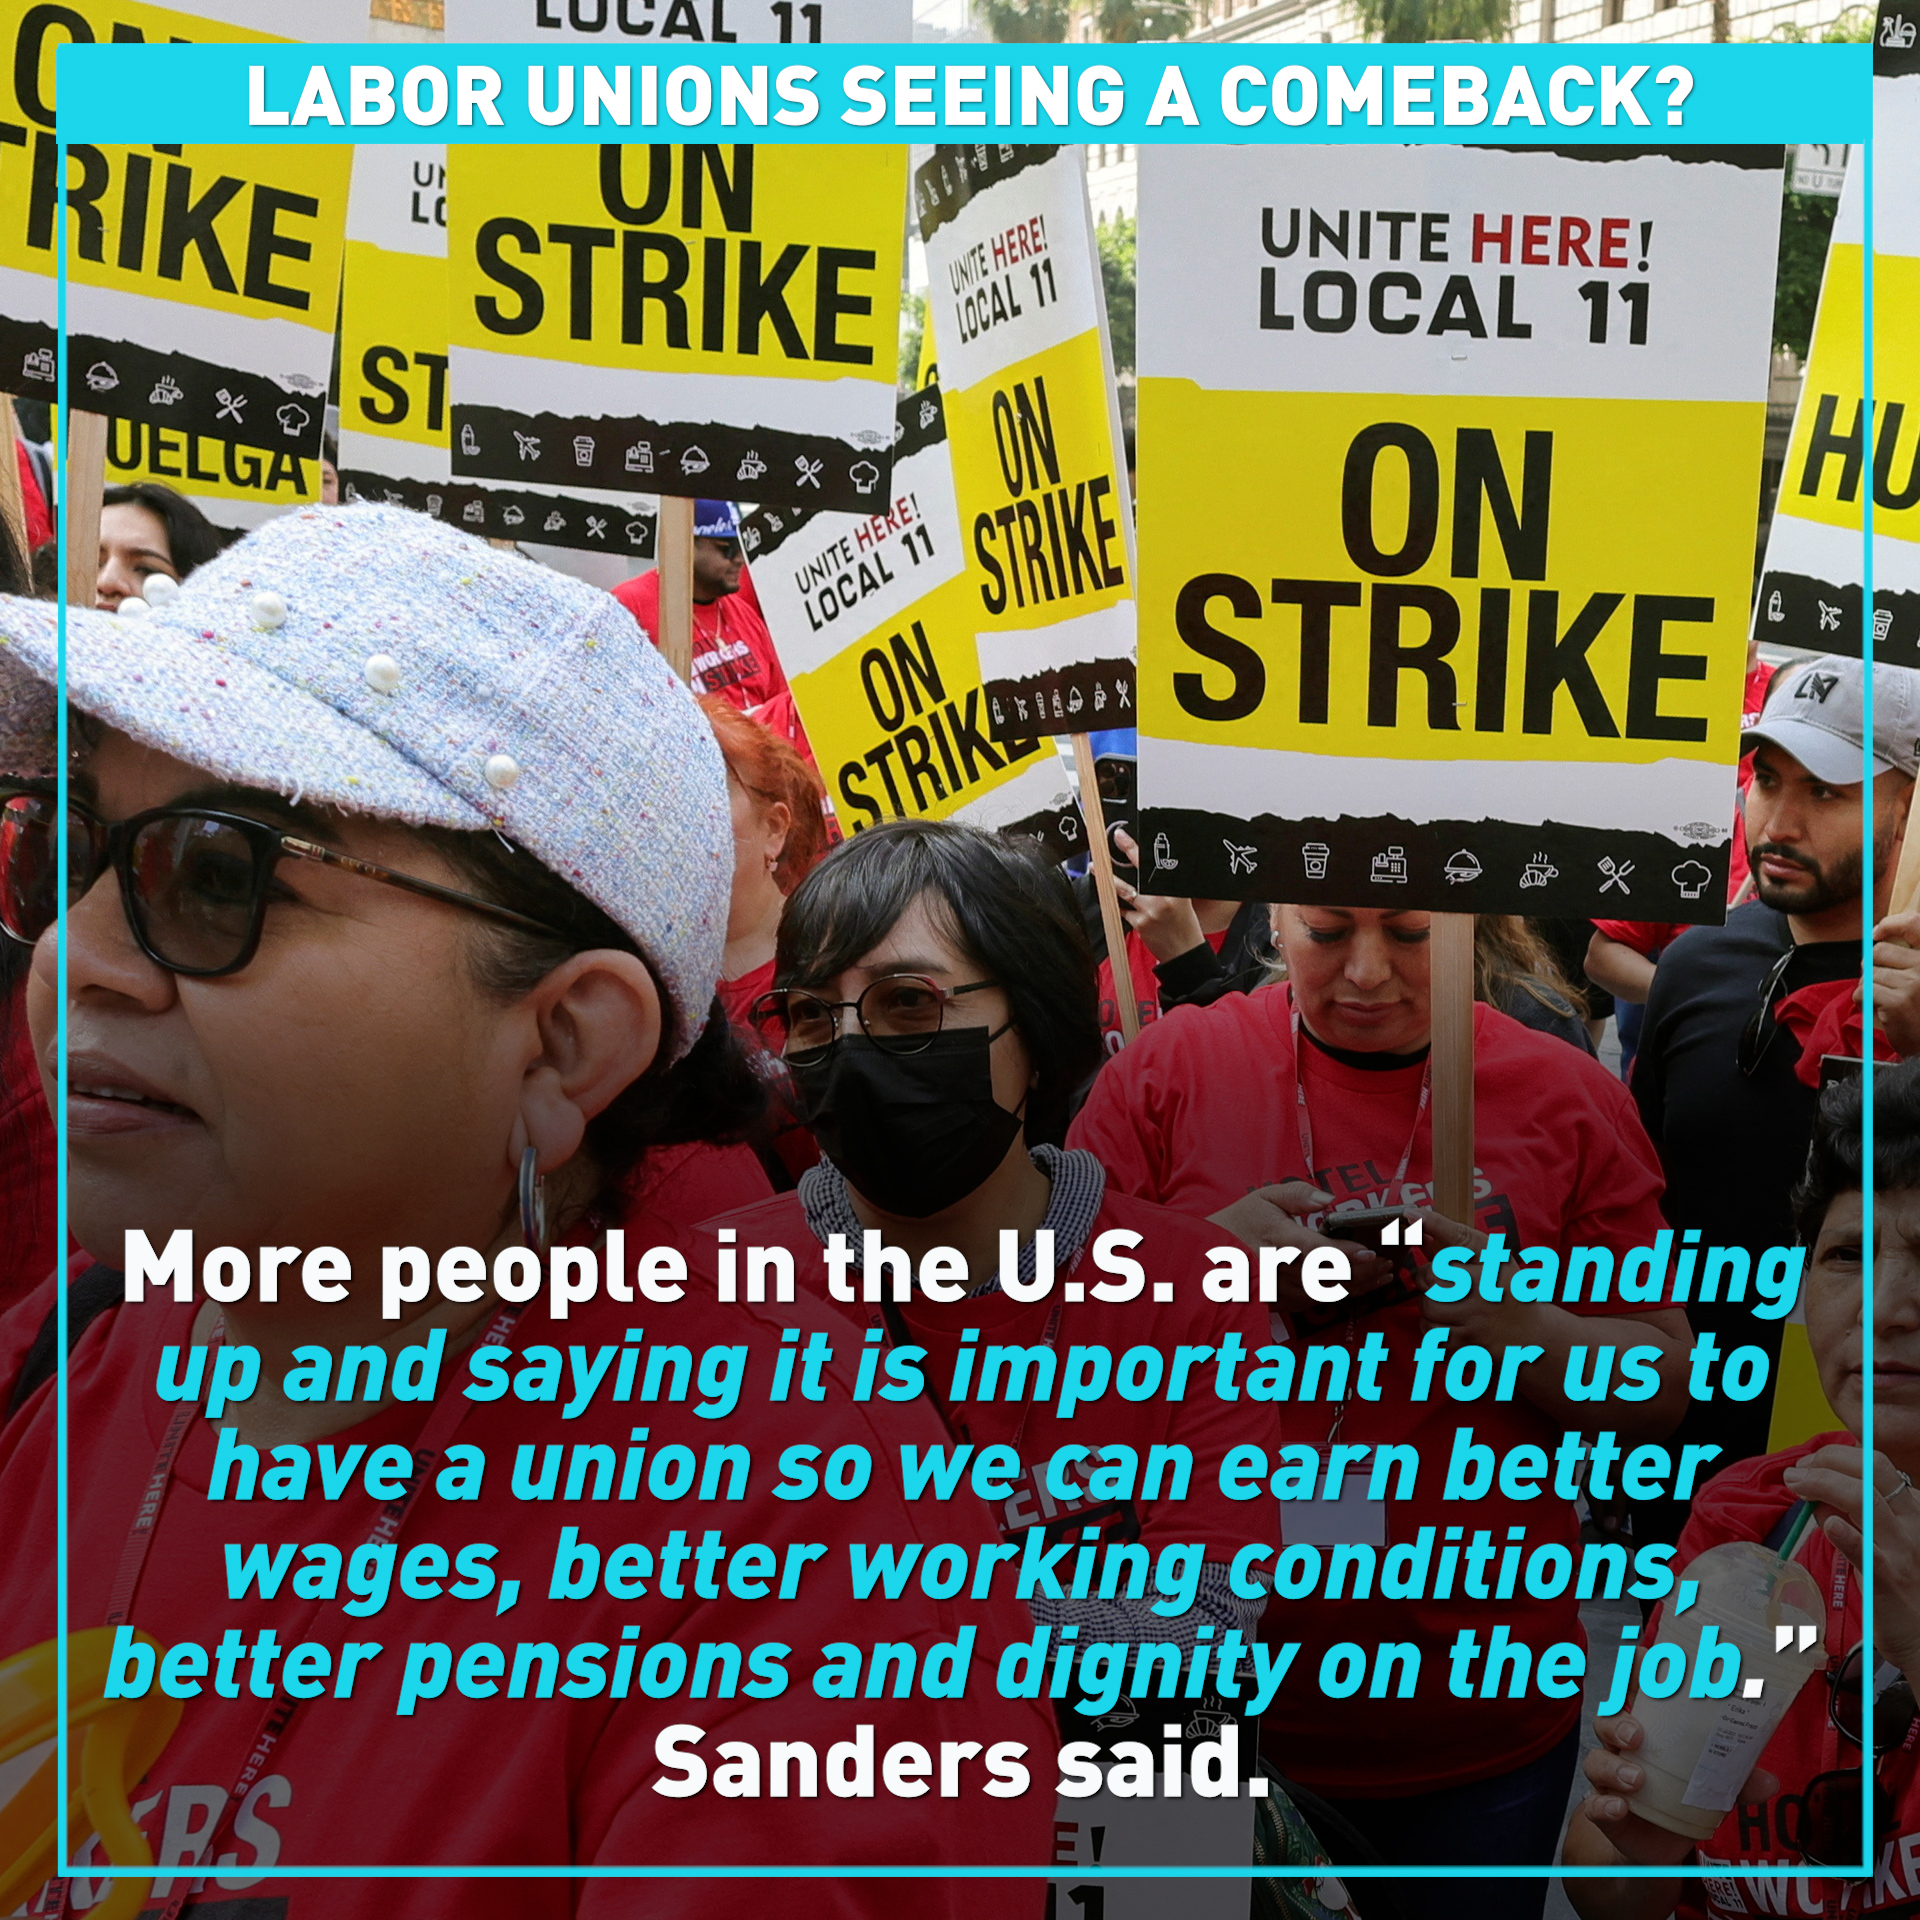 Are labor unions making a comeback in the United States? 